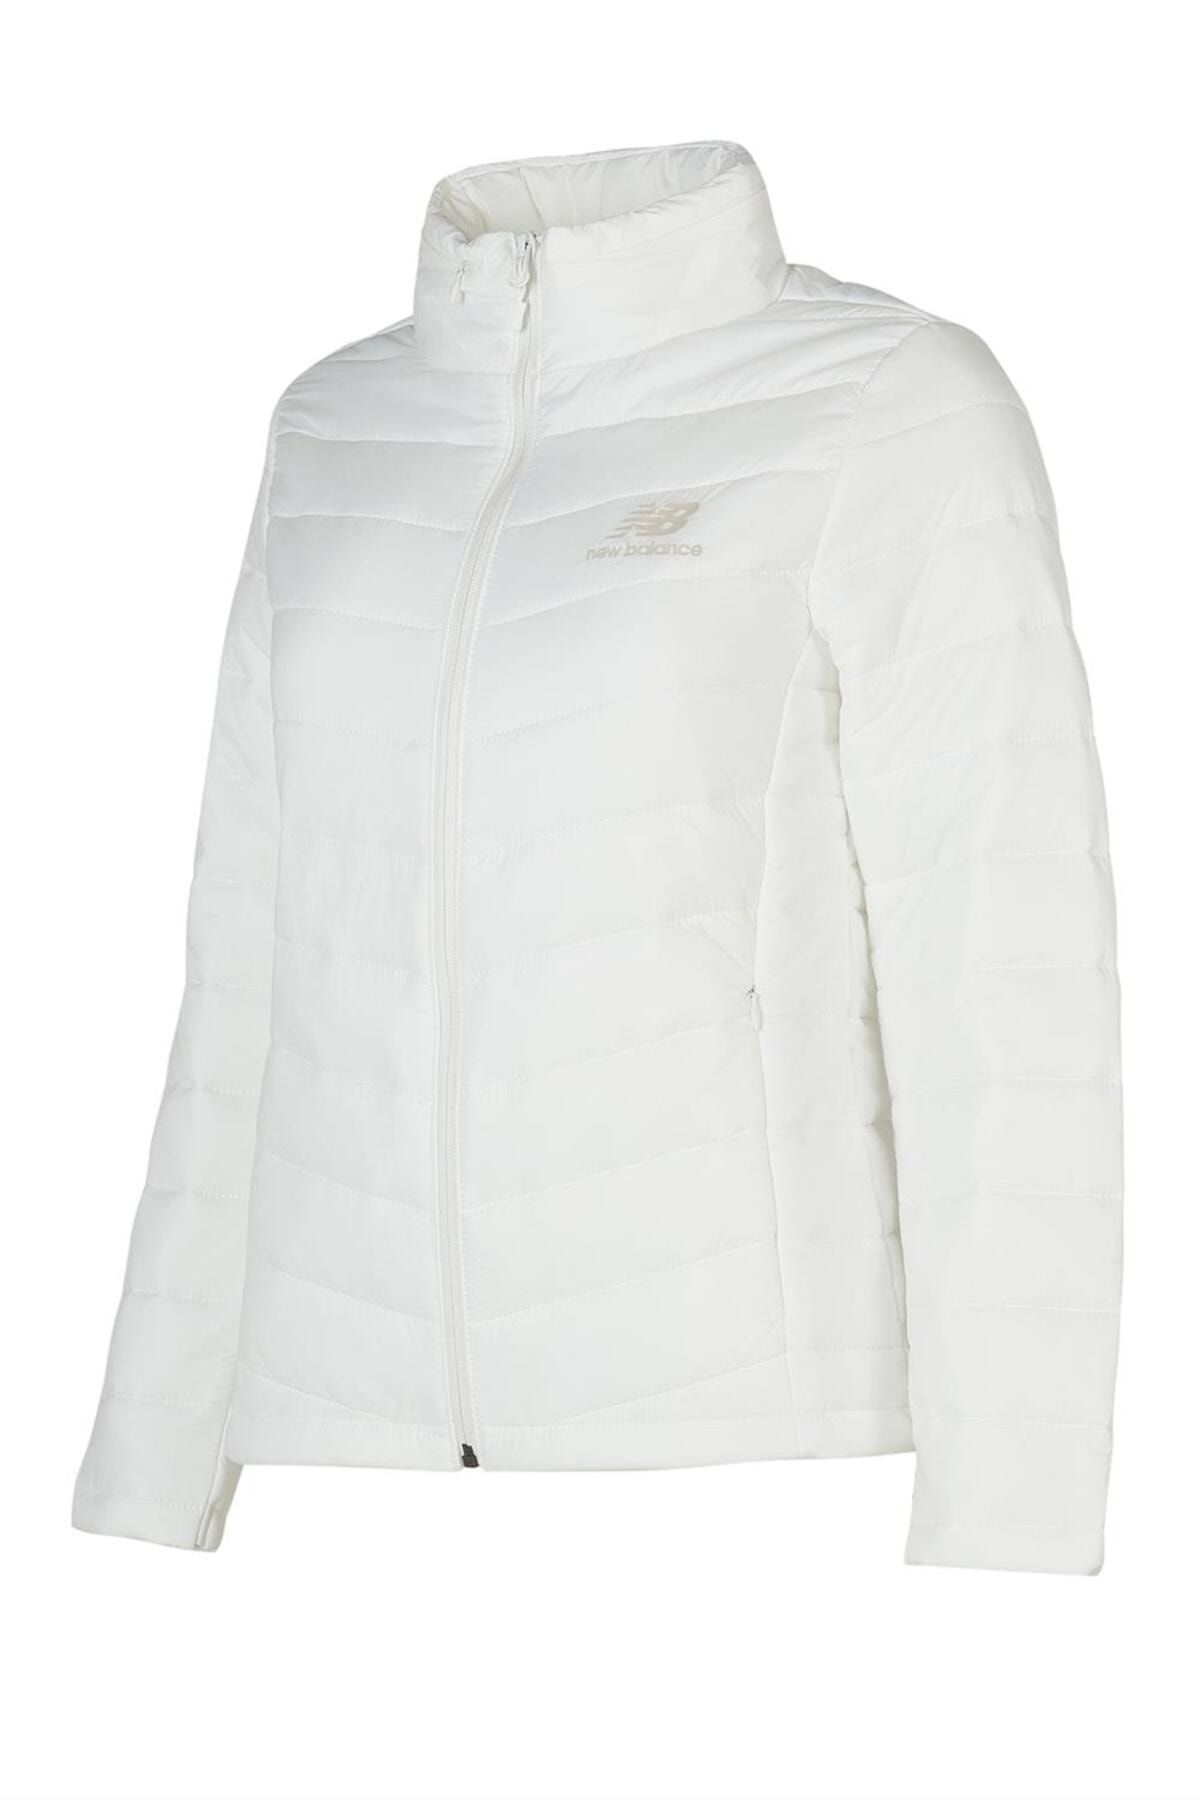 New Balance Lifestyle Women Jacket Kadın Beyaz Mont Wnj3385-wt